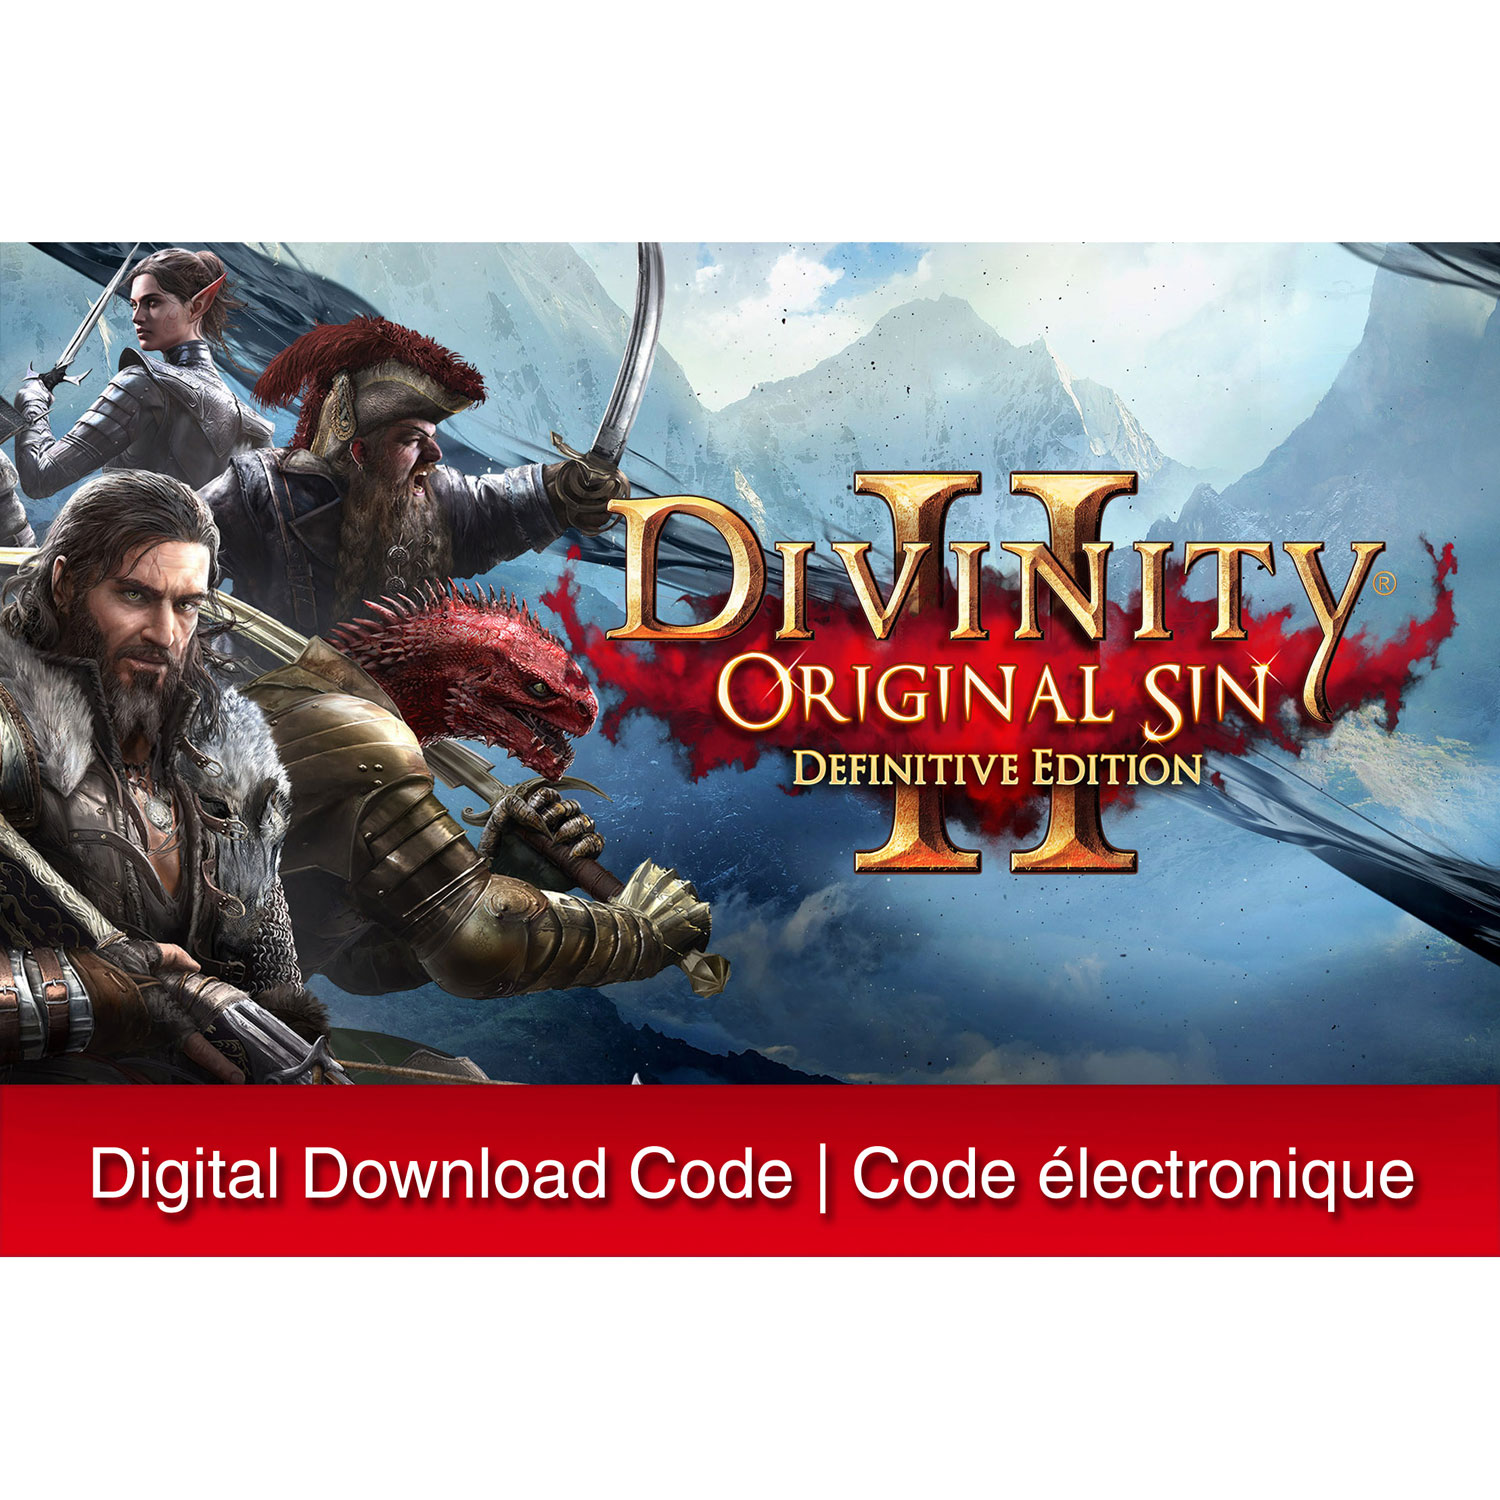 Divinity: Original Sin II Definitive Edition (Switch) - Digital Download